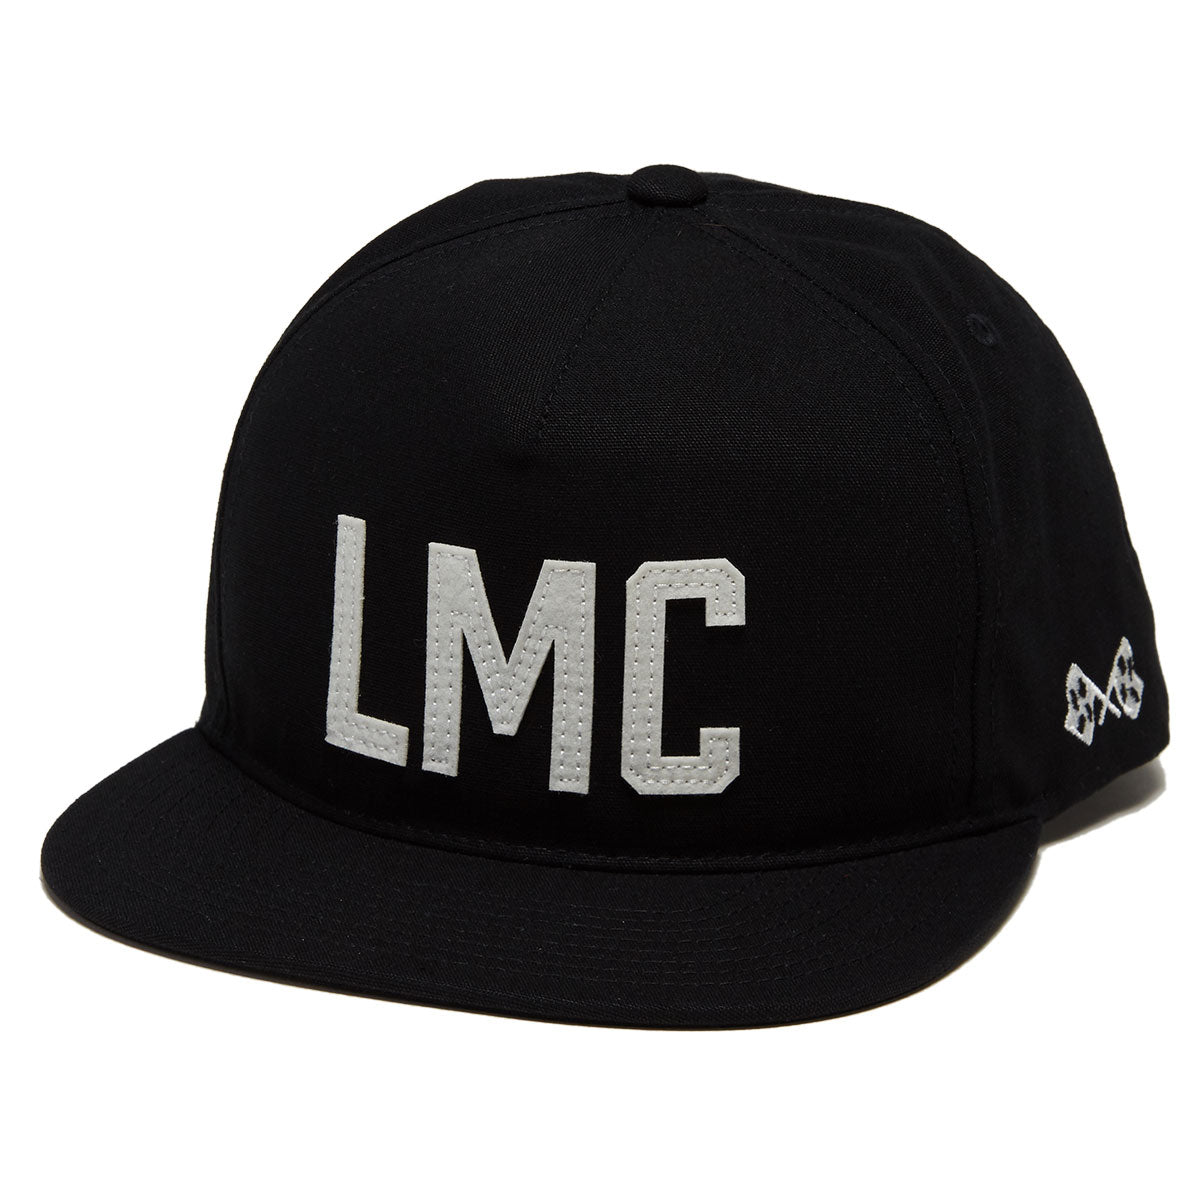 Loser Machine Sans Hat - Black image 1